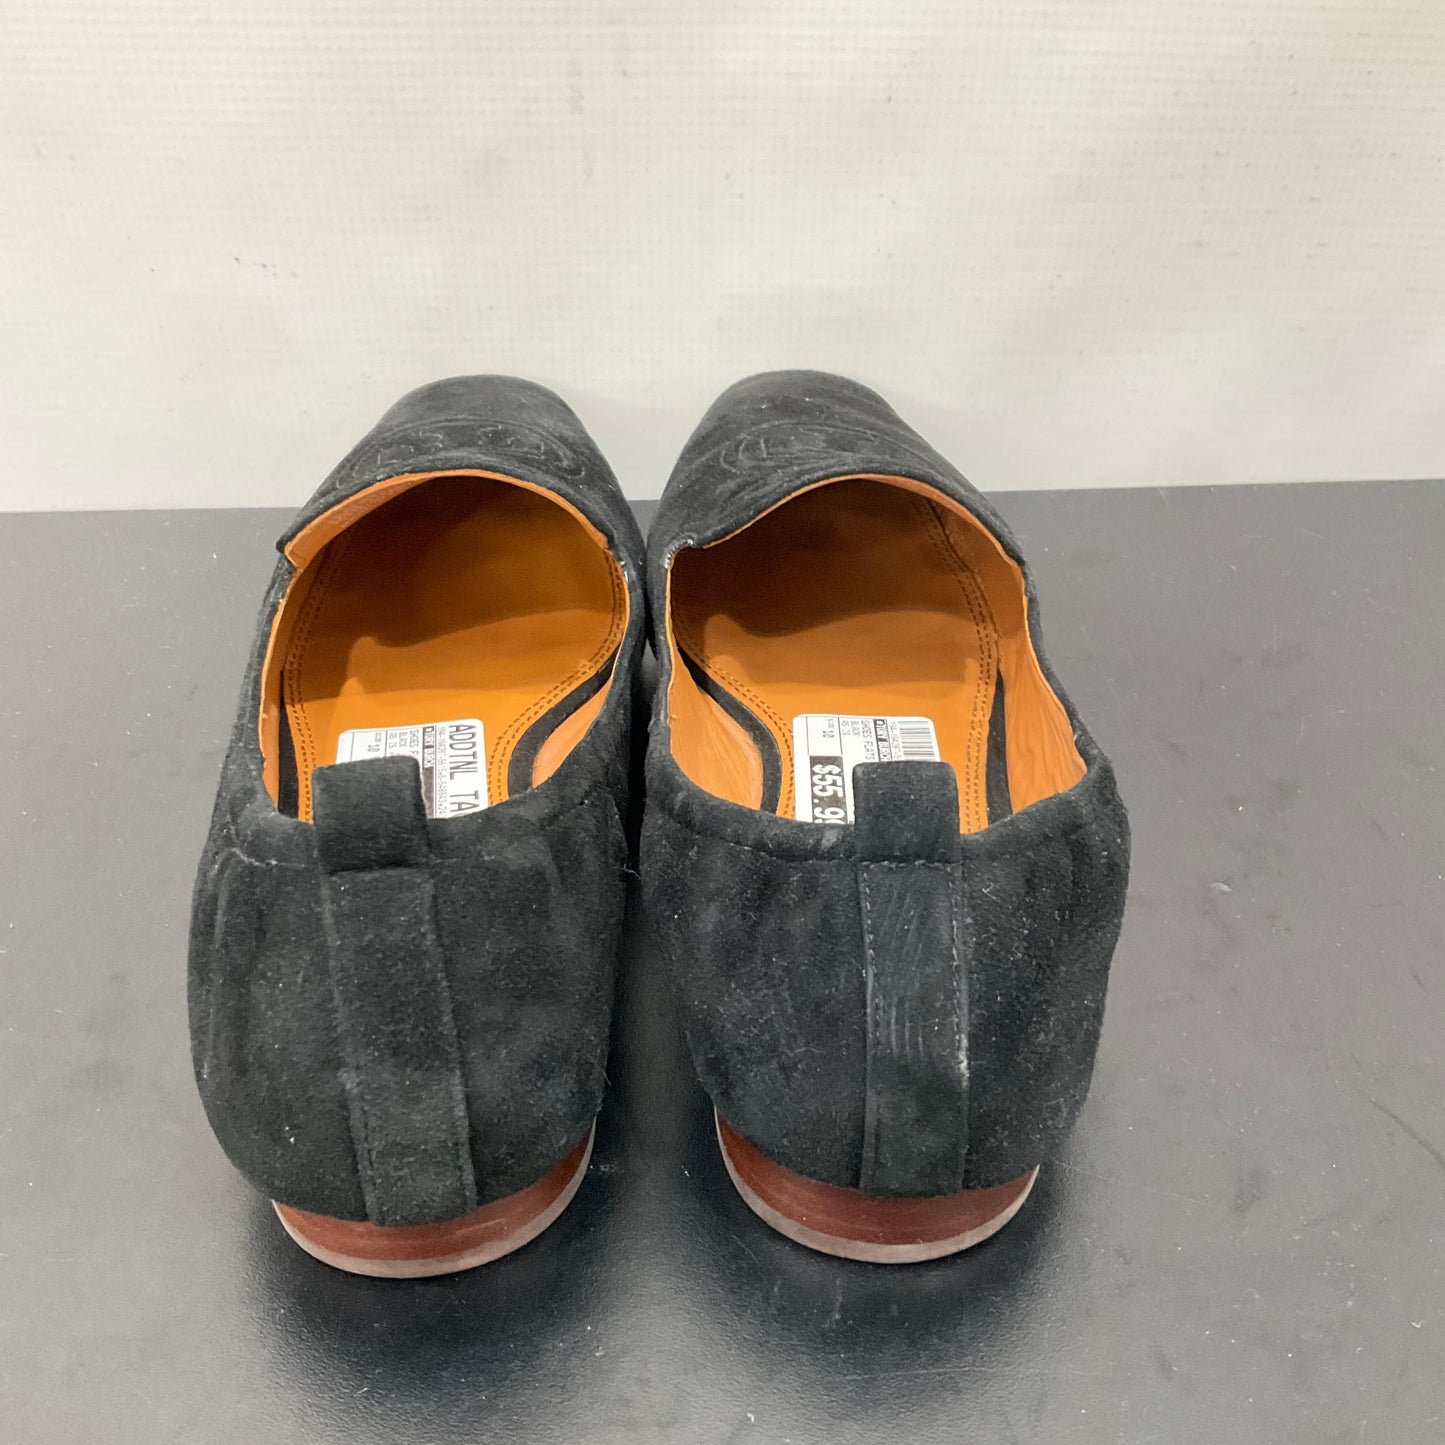 Black Shoes Flats Tory Burch, Size 10